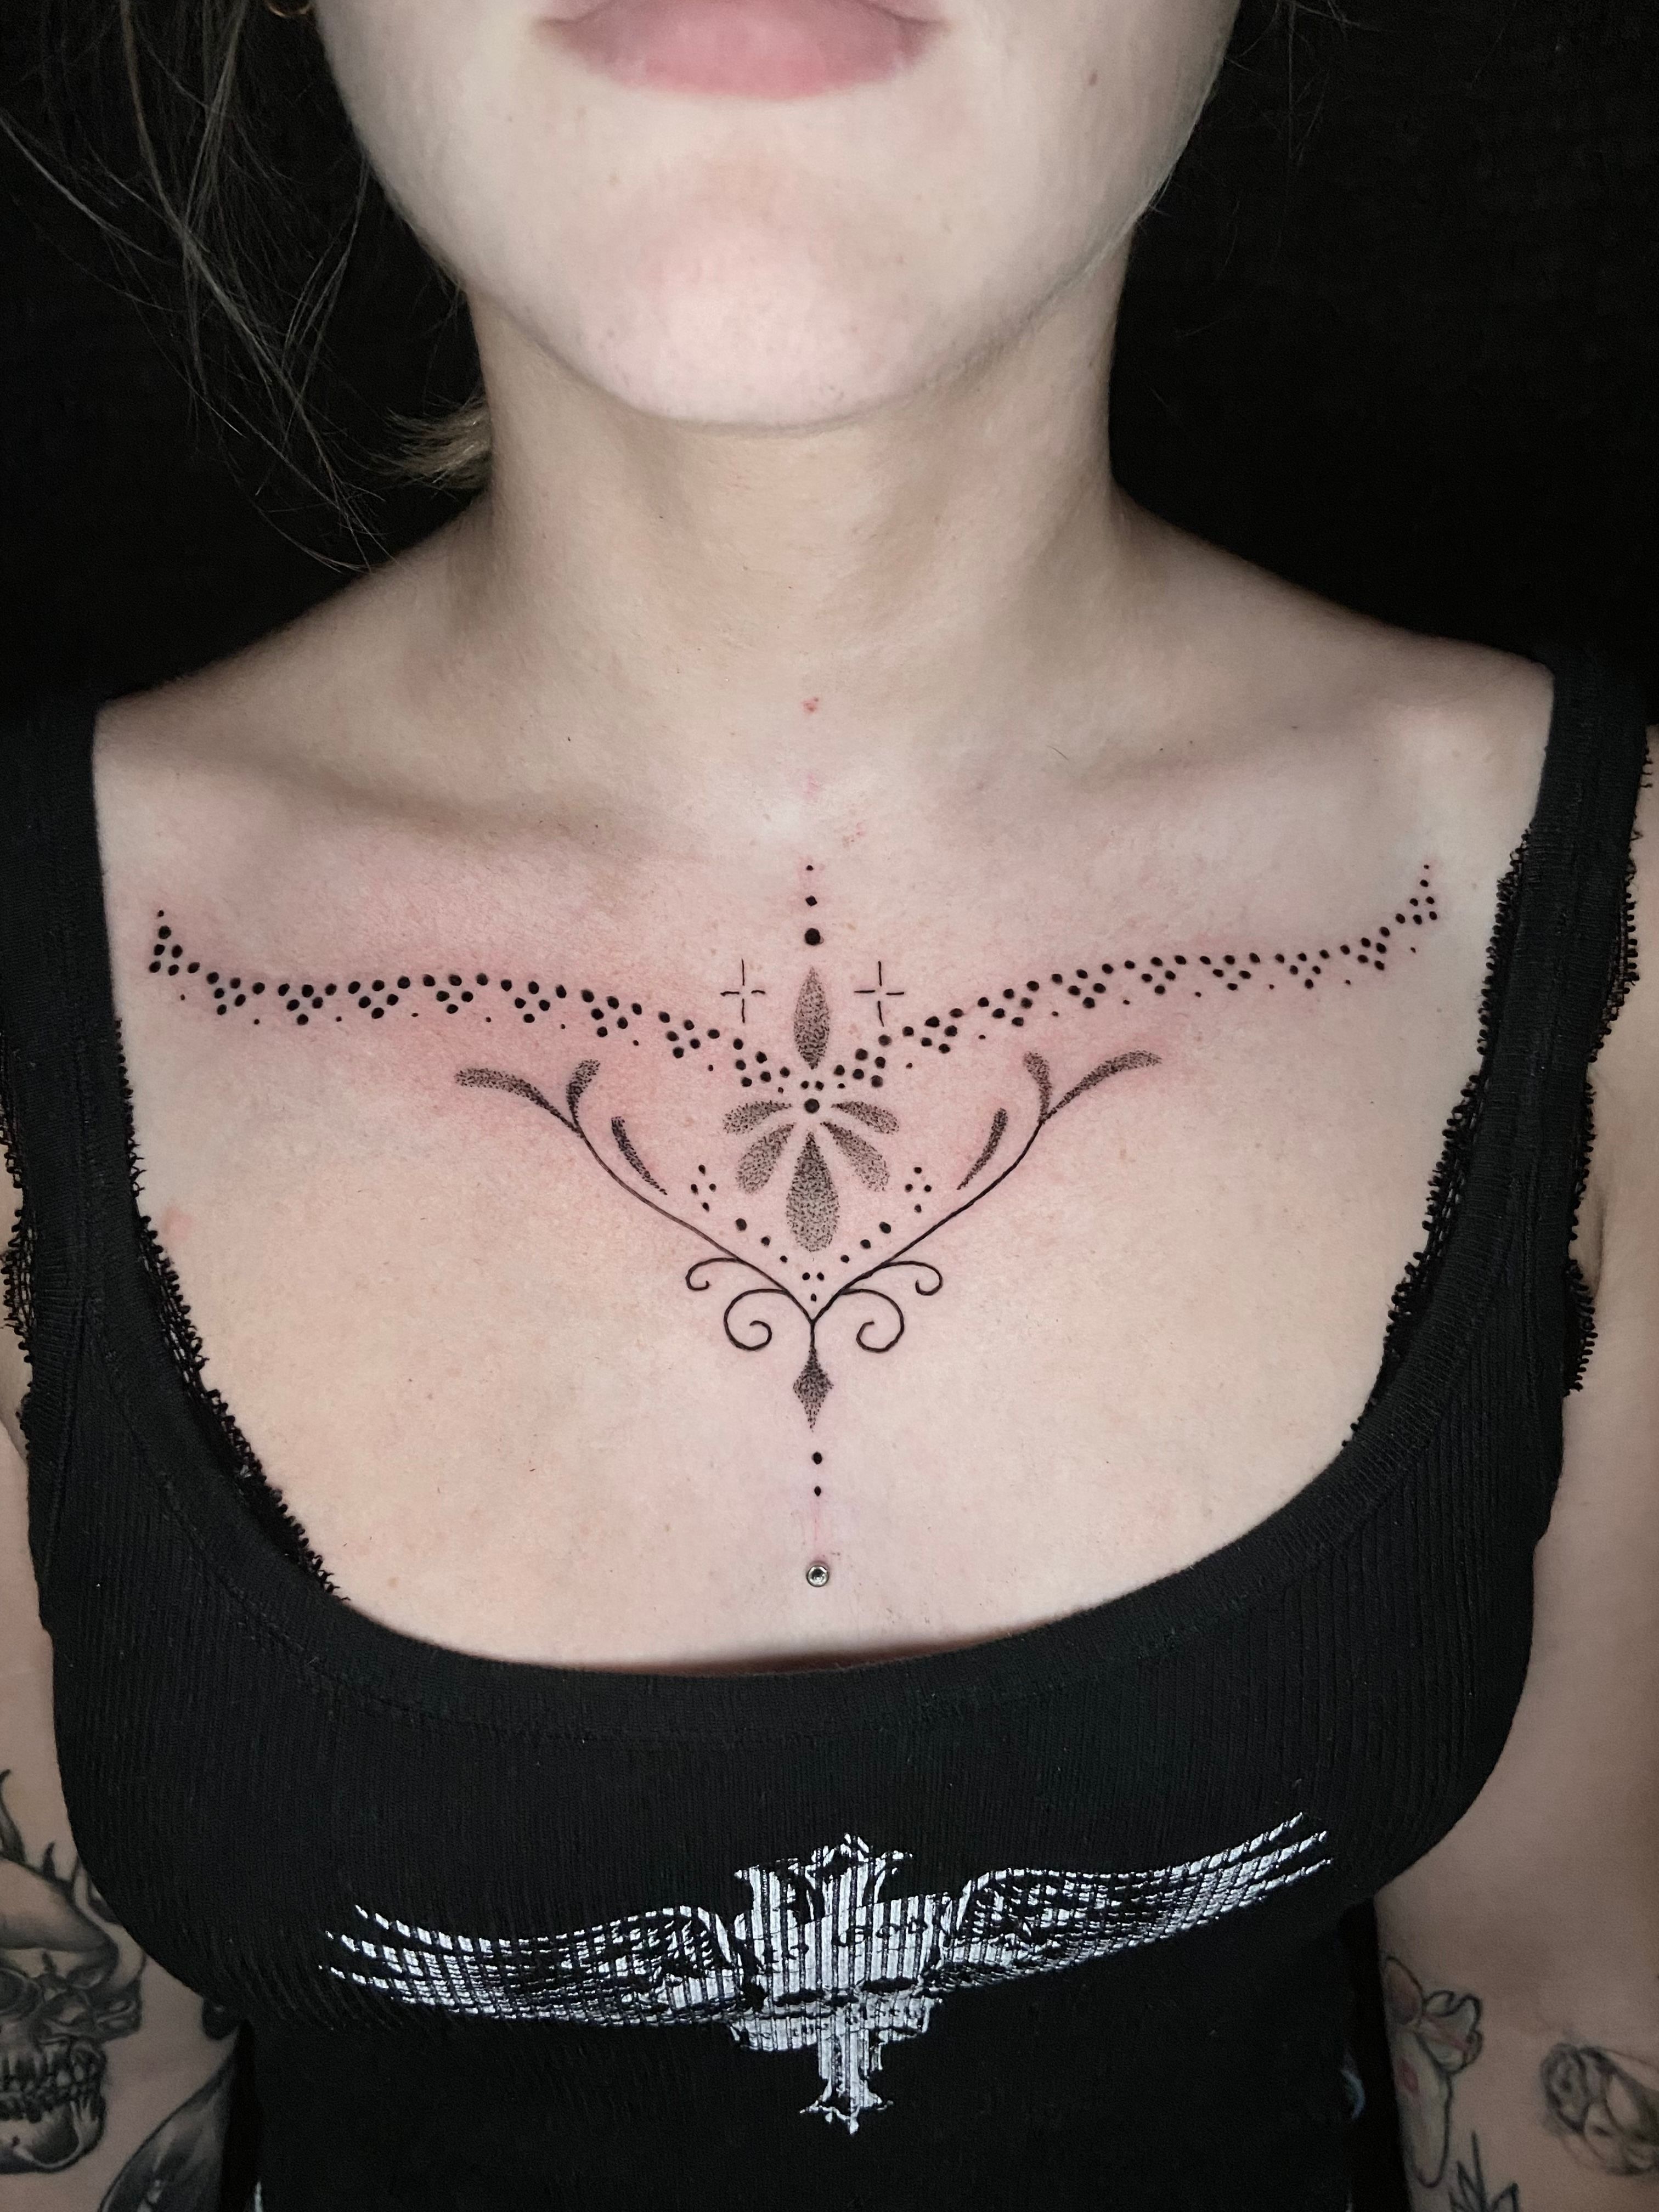 chest tattoo woman by tattoosuzette on DeviantArt